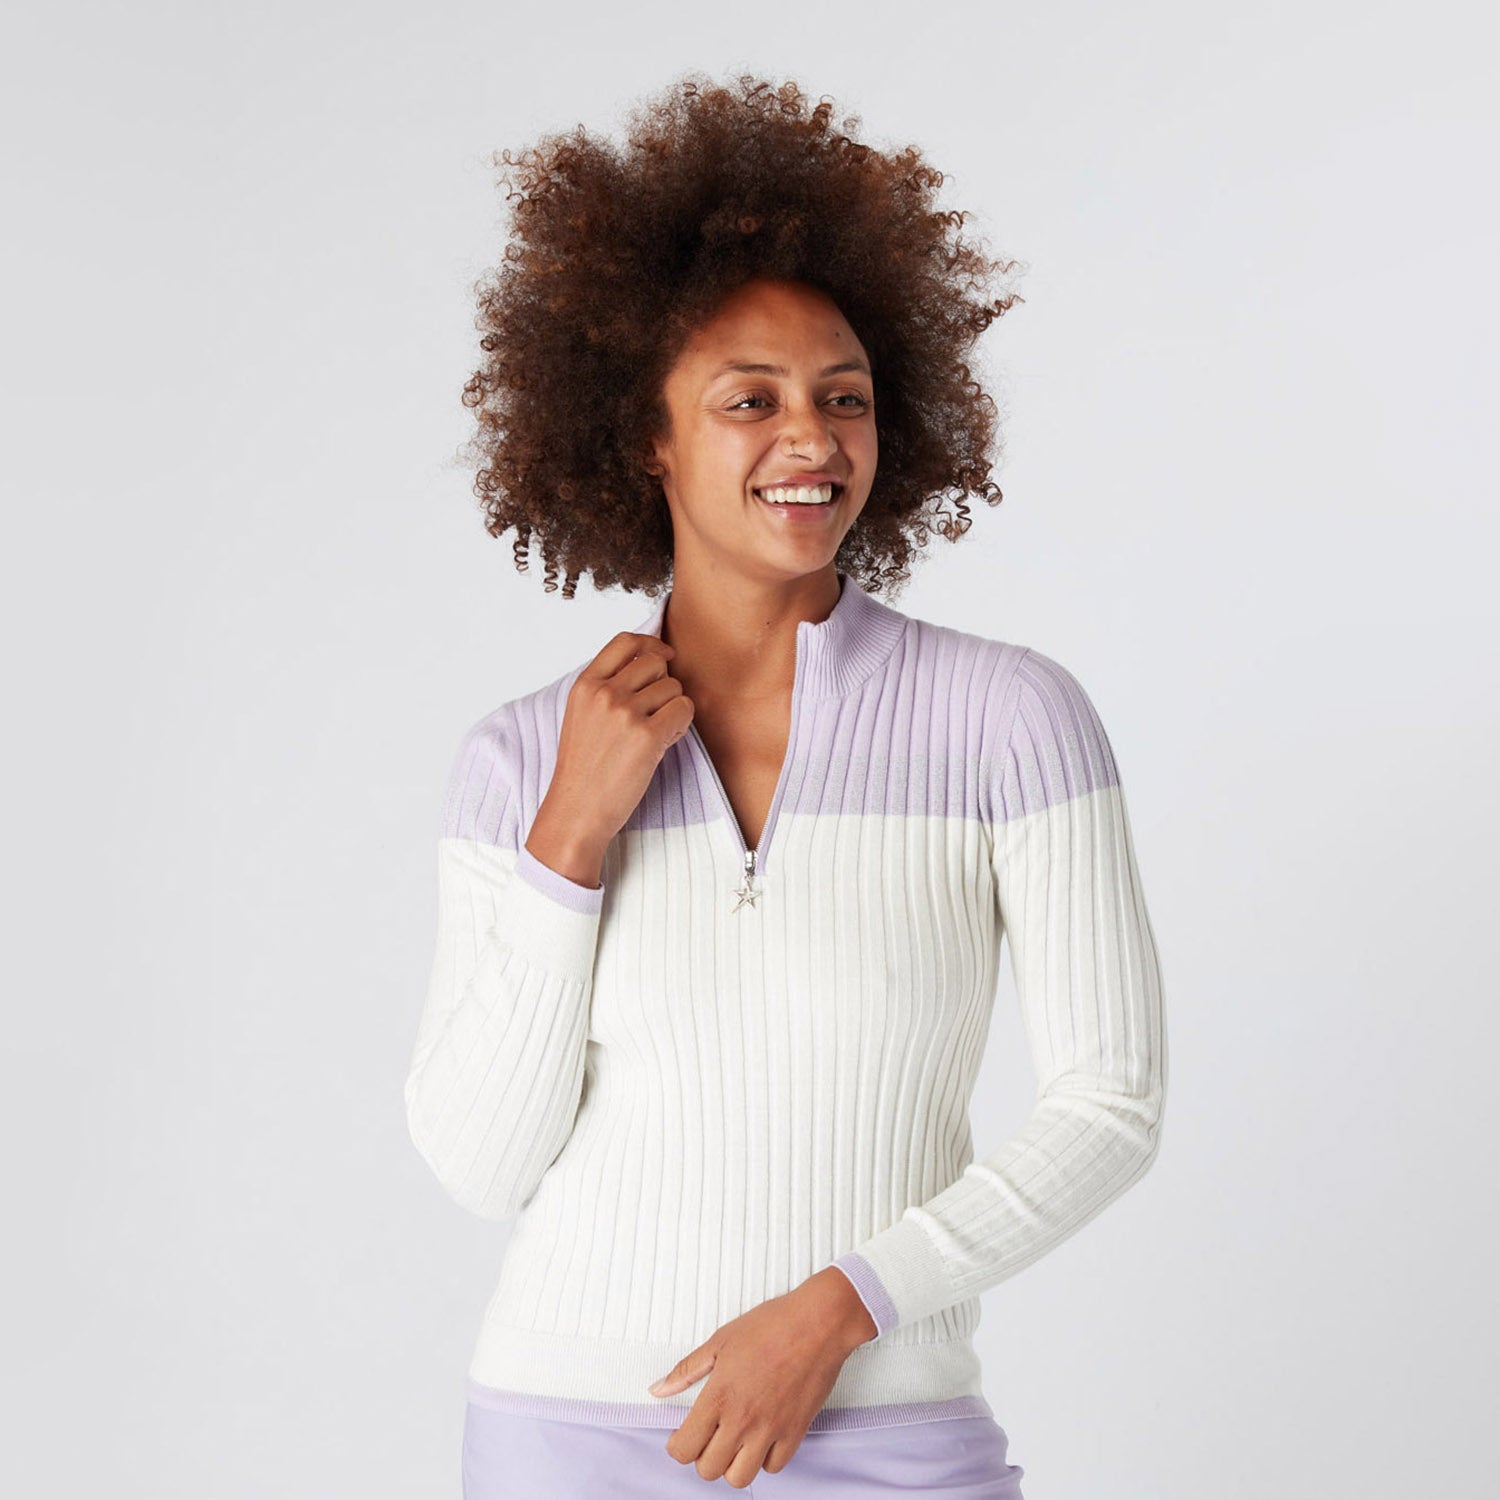 Swing Out Sister Ladies Colour Block Zip-Neck Sweater in Digital Lavender